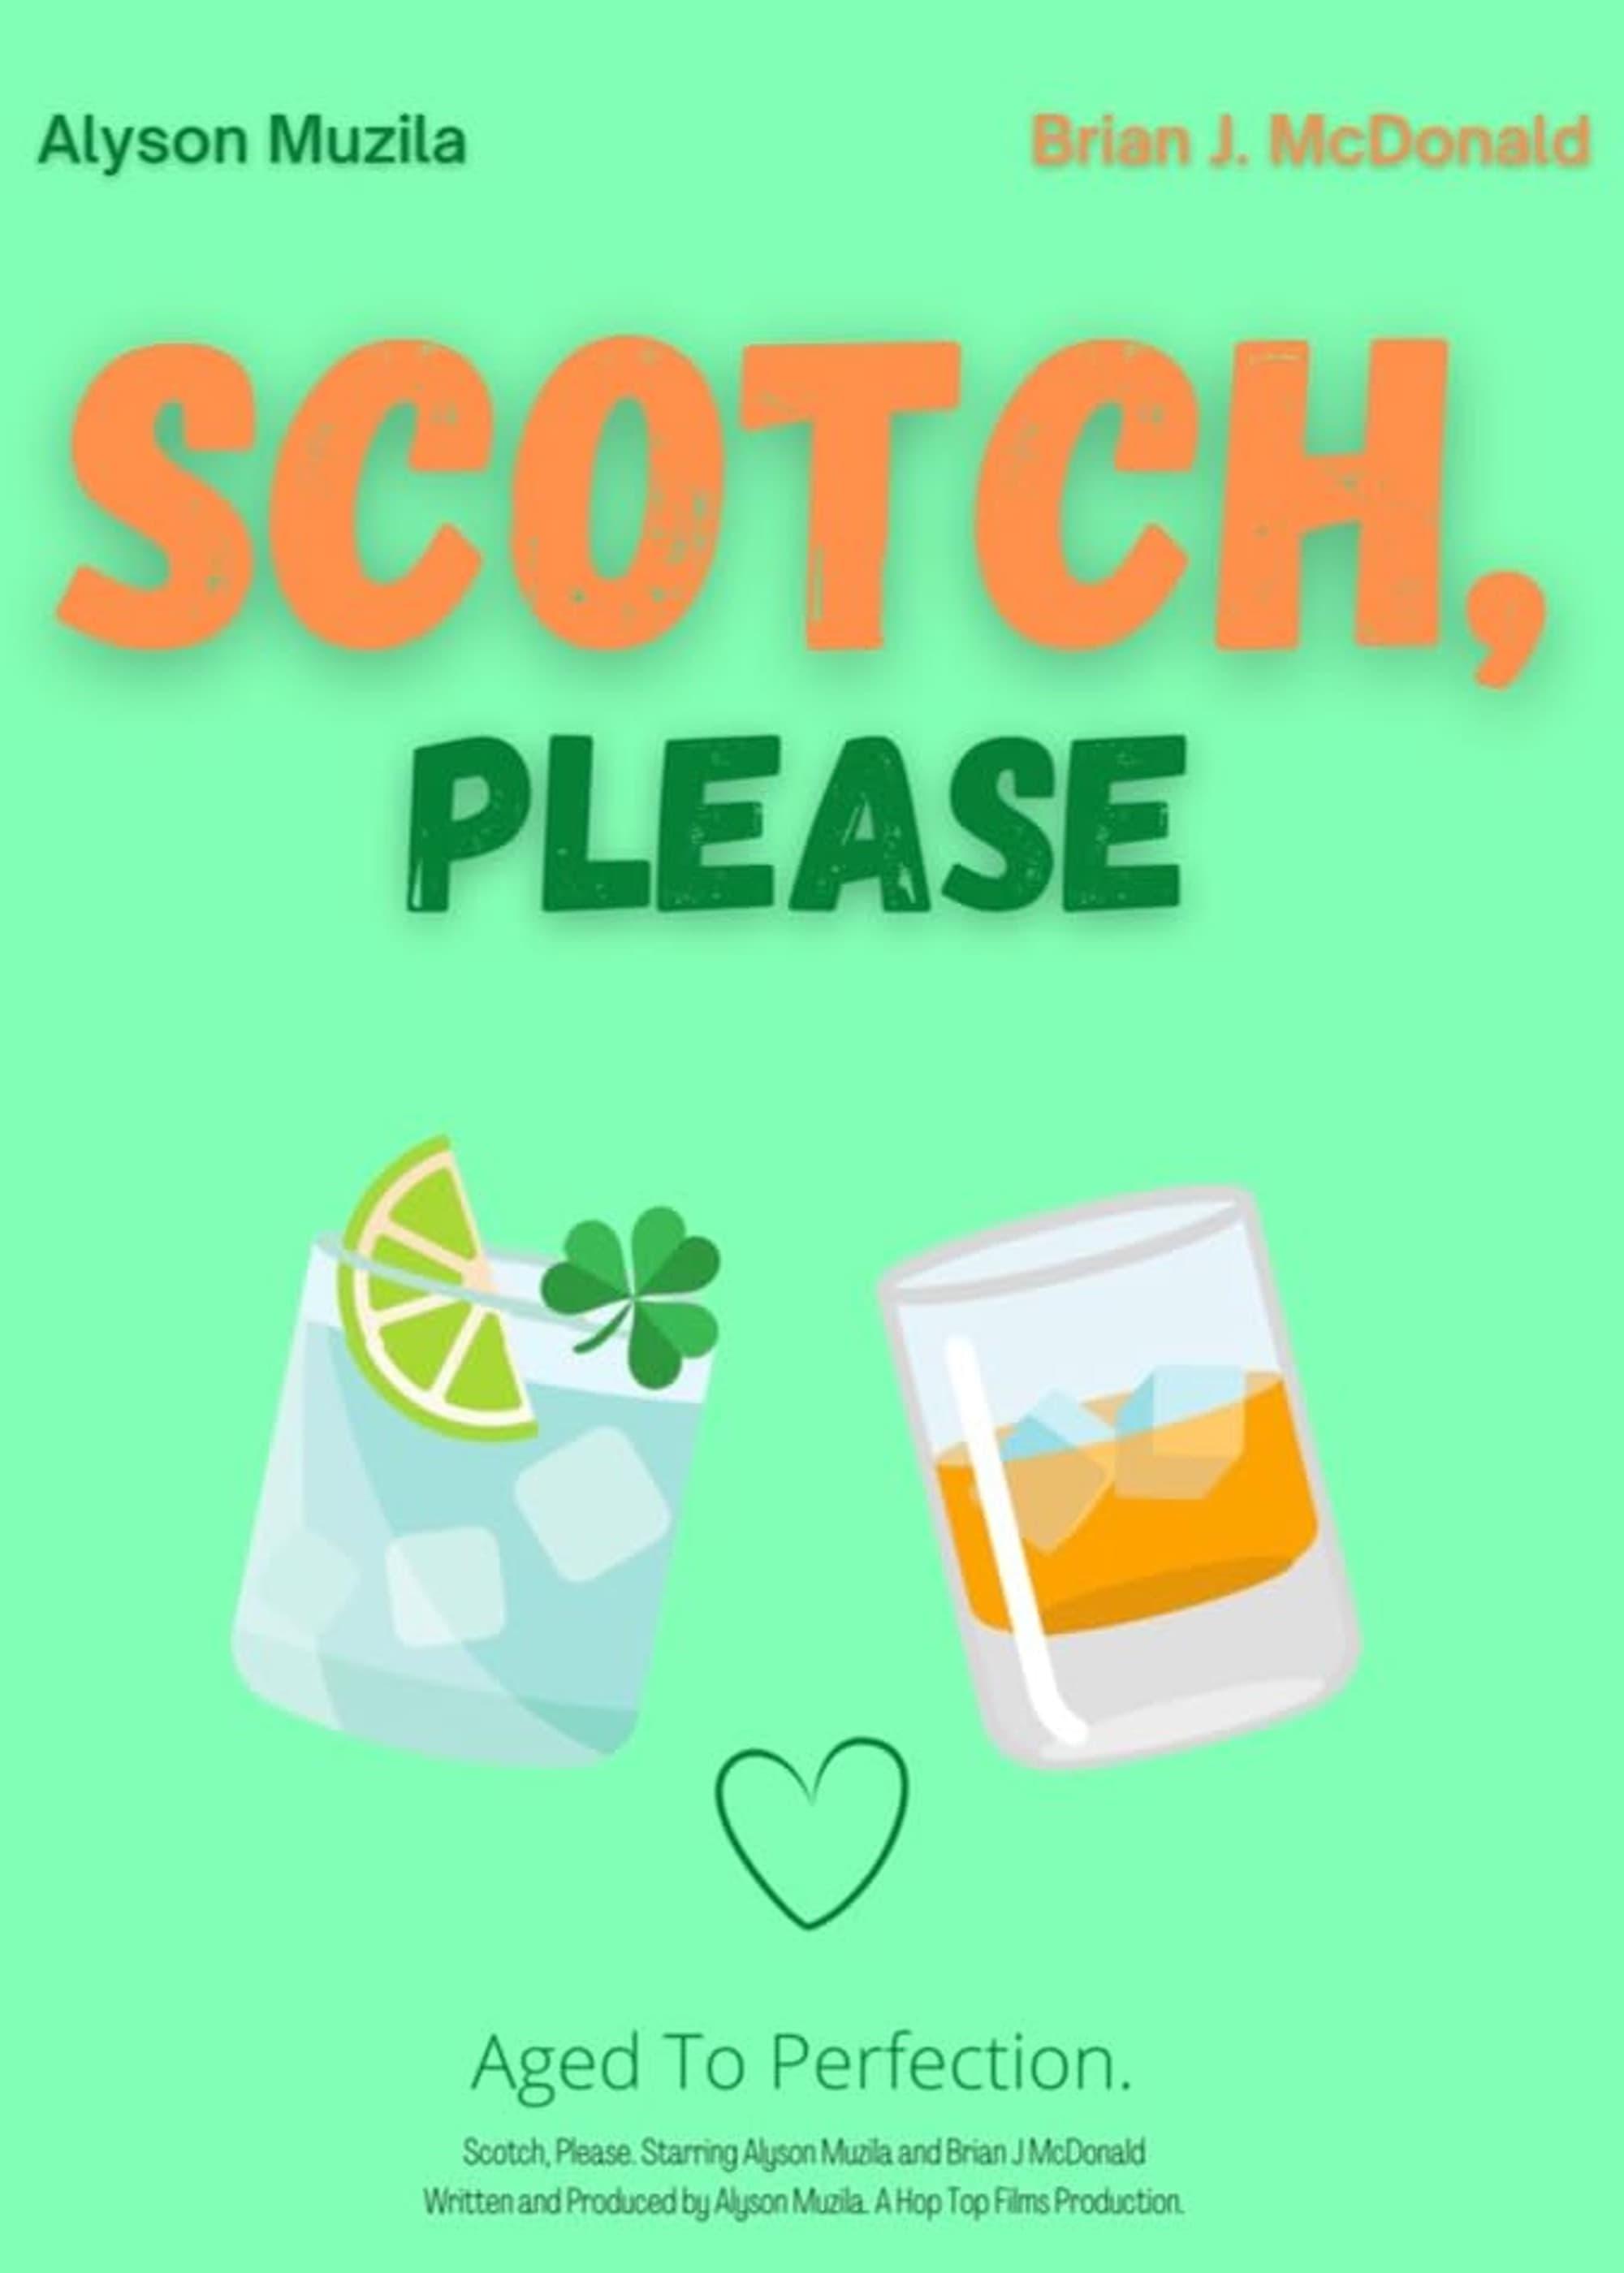 Scotch, Please poster